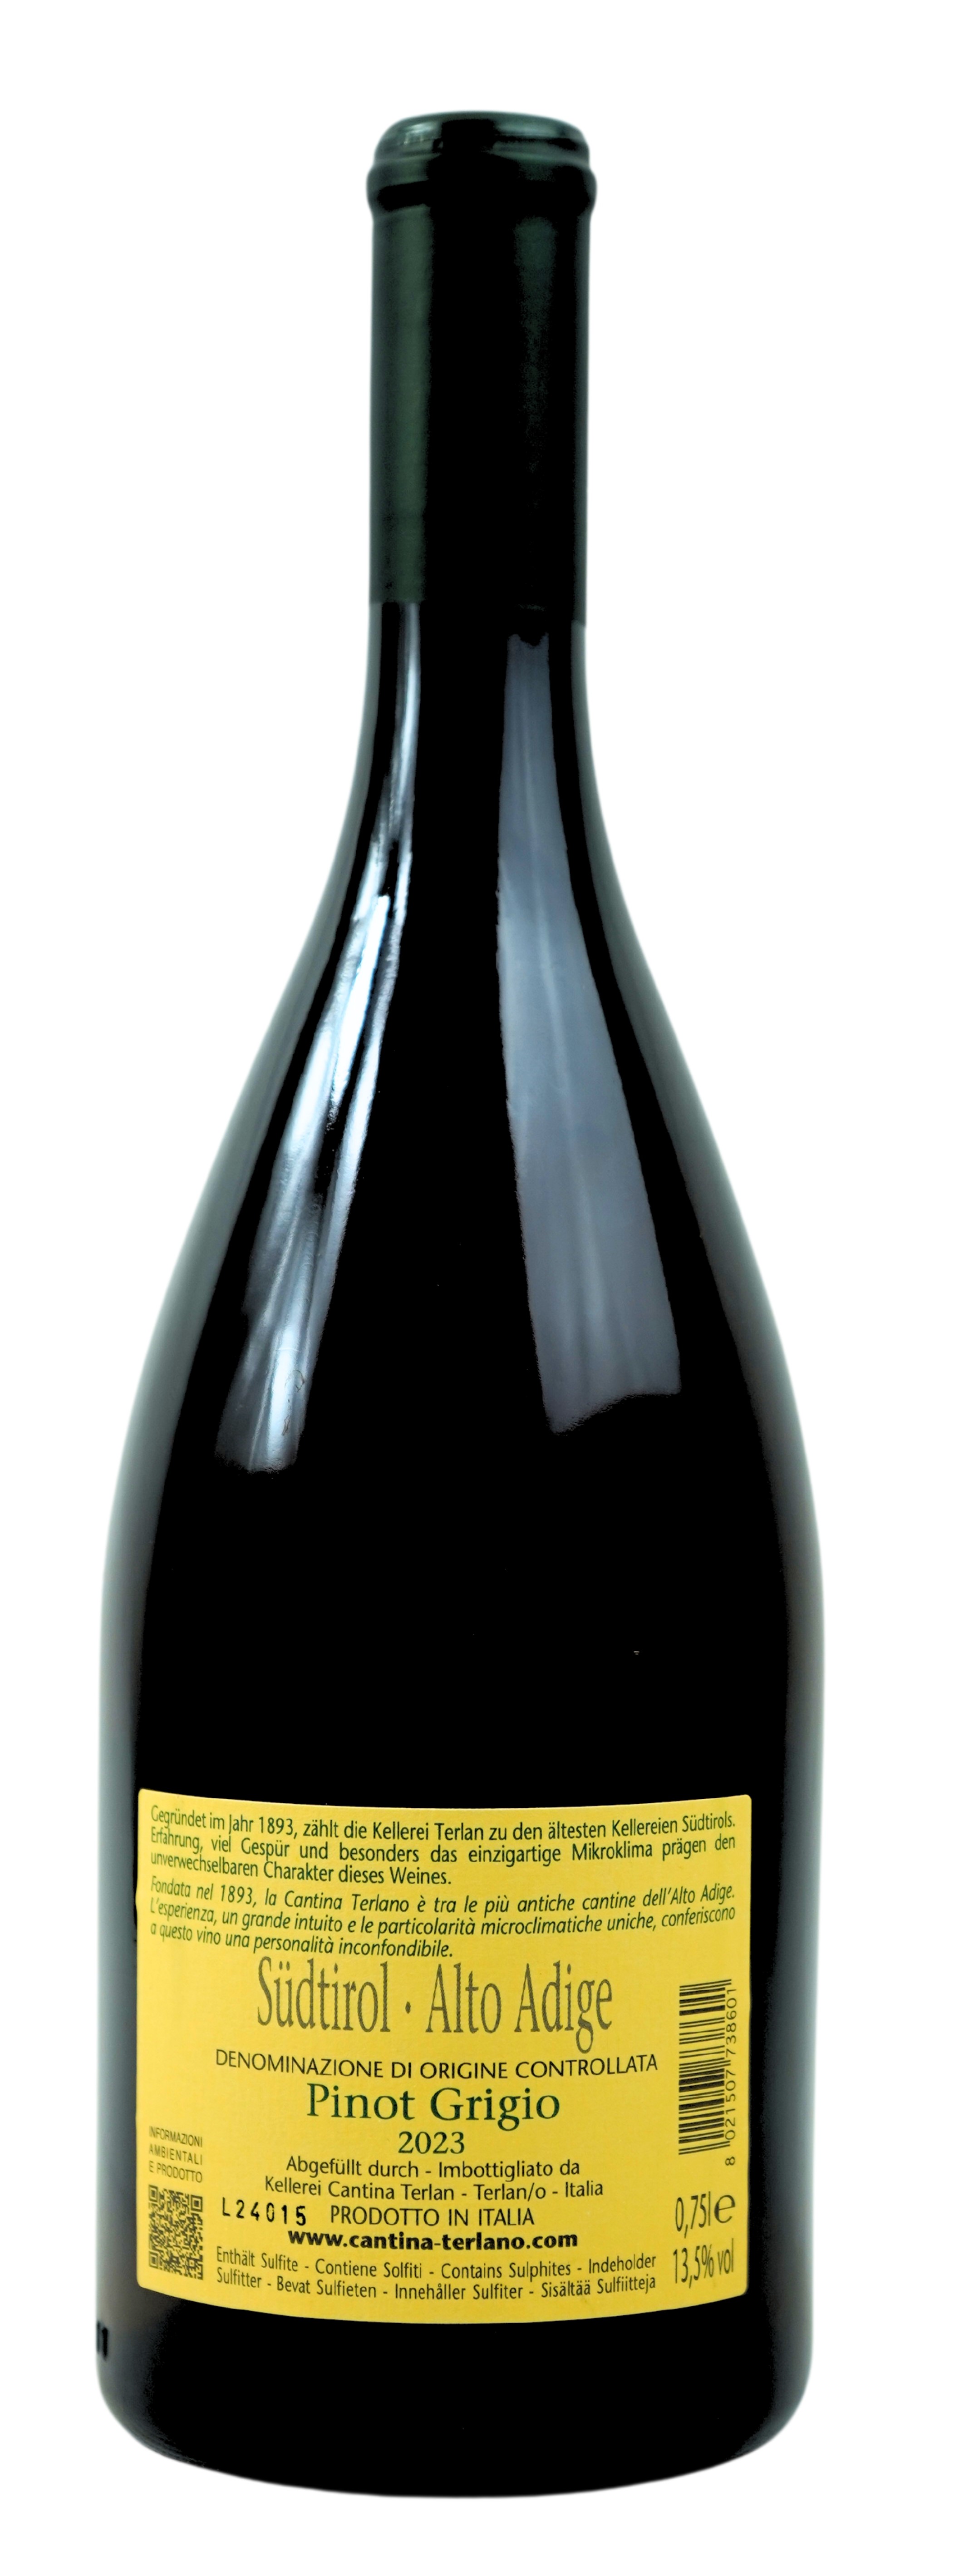 2023 Pinot grigio Alto Adige DOC